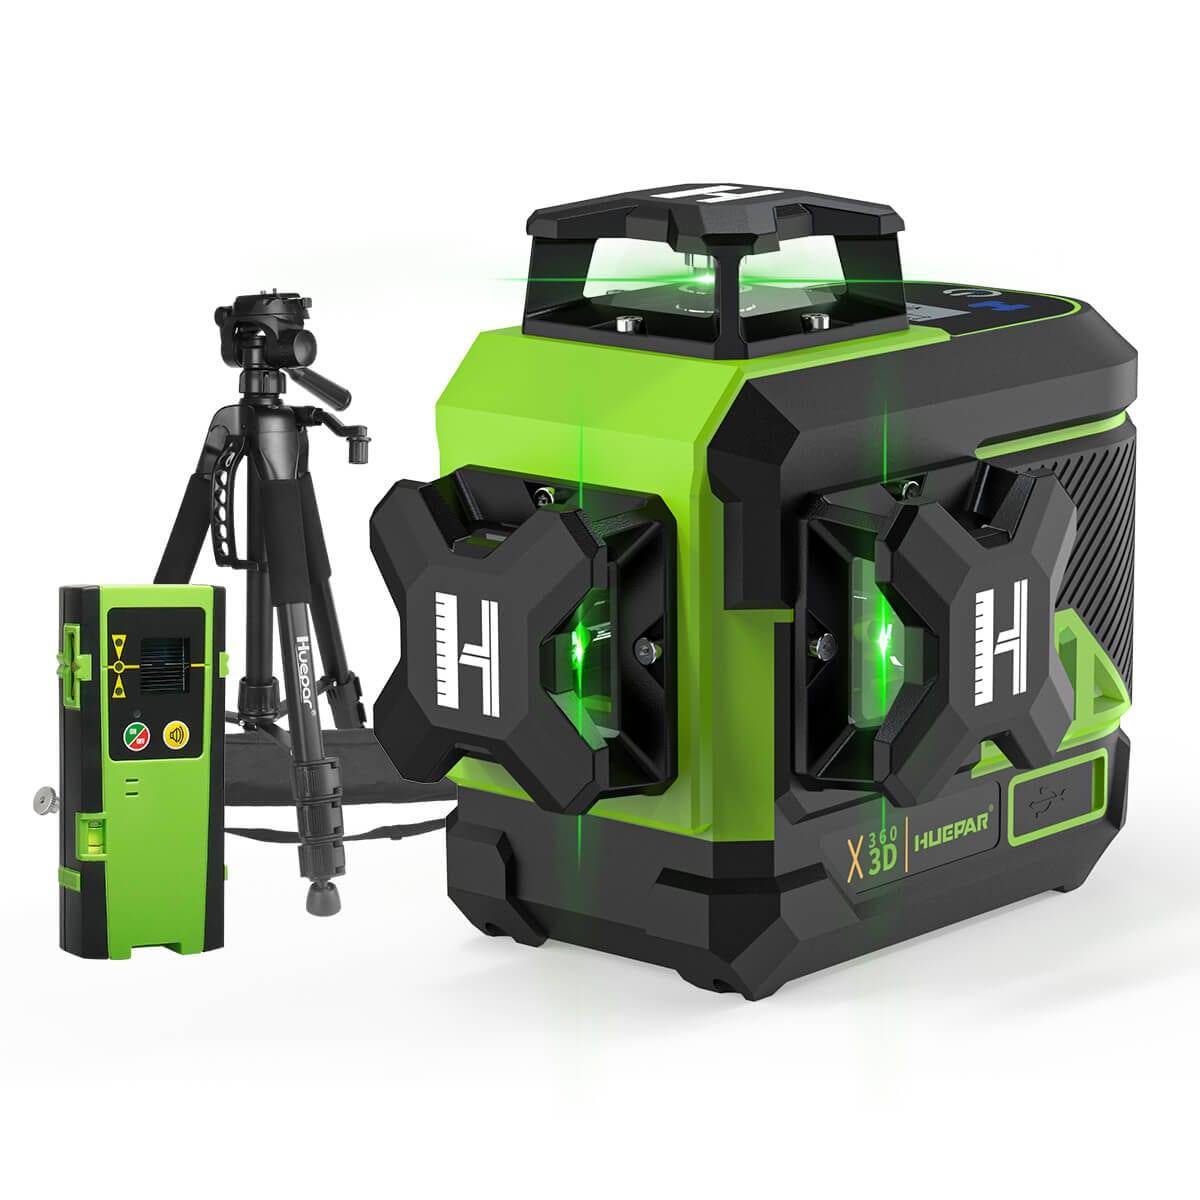 Huepar Z03CG - 3D Green Beam 12 Lines Laser Self Leveling Levels with Bluetooth & Remote Control. - HUEPAR UK